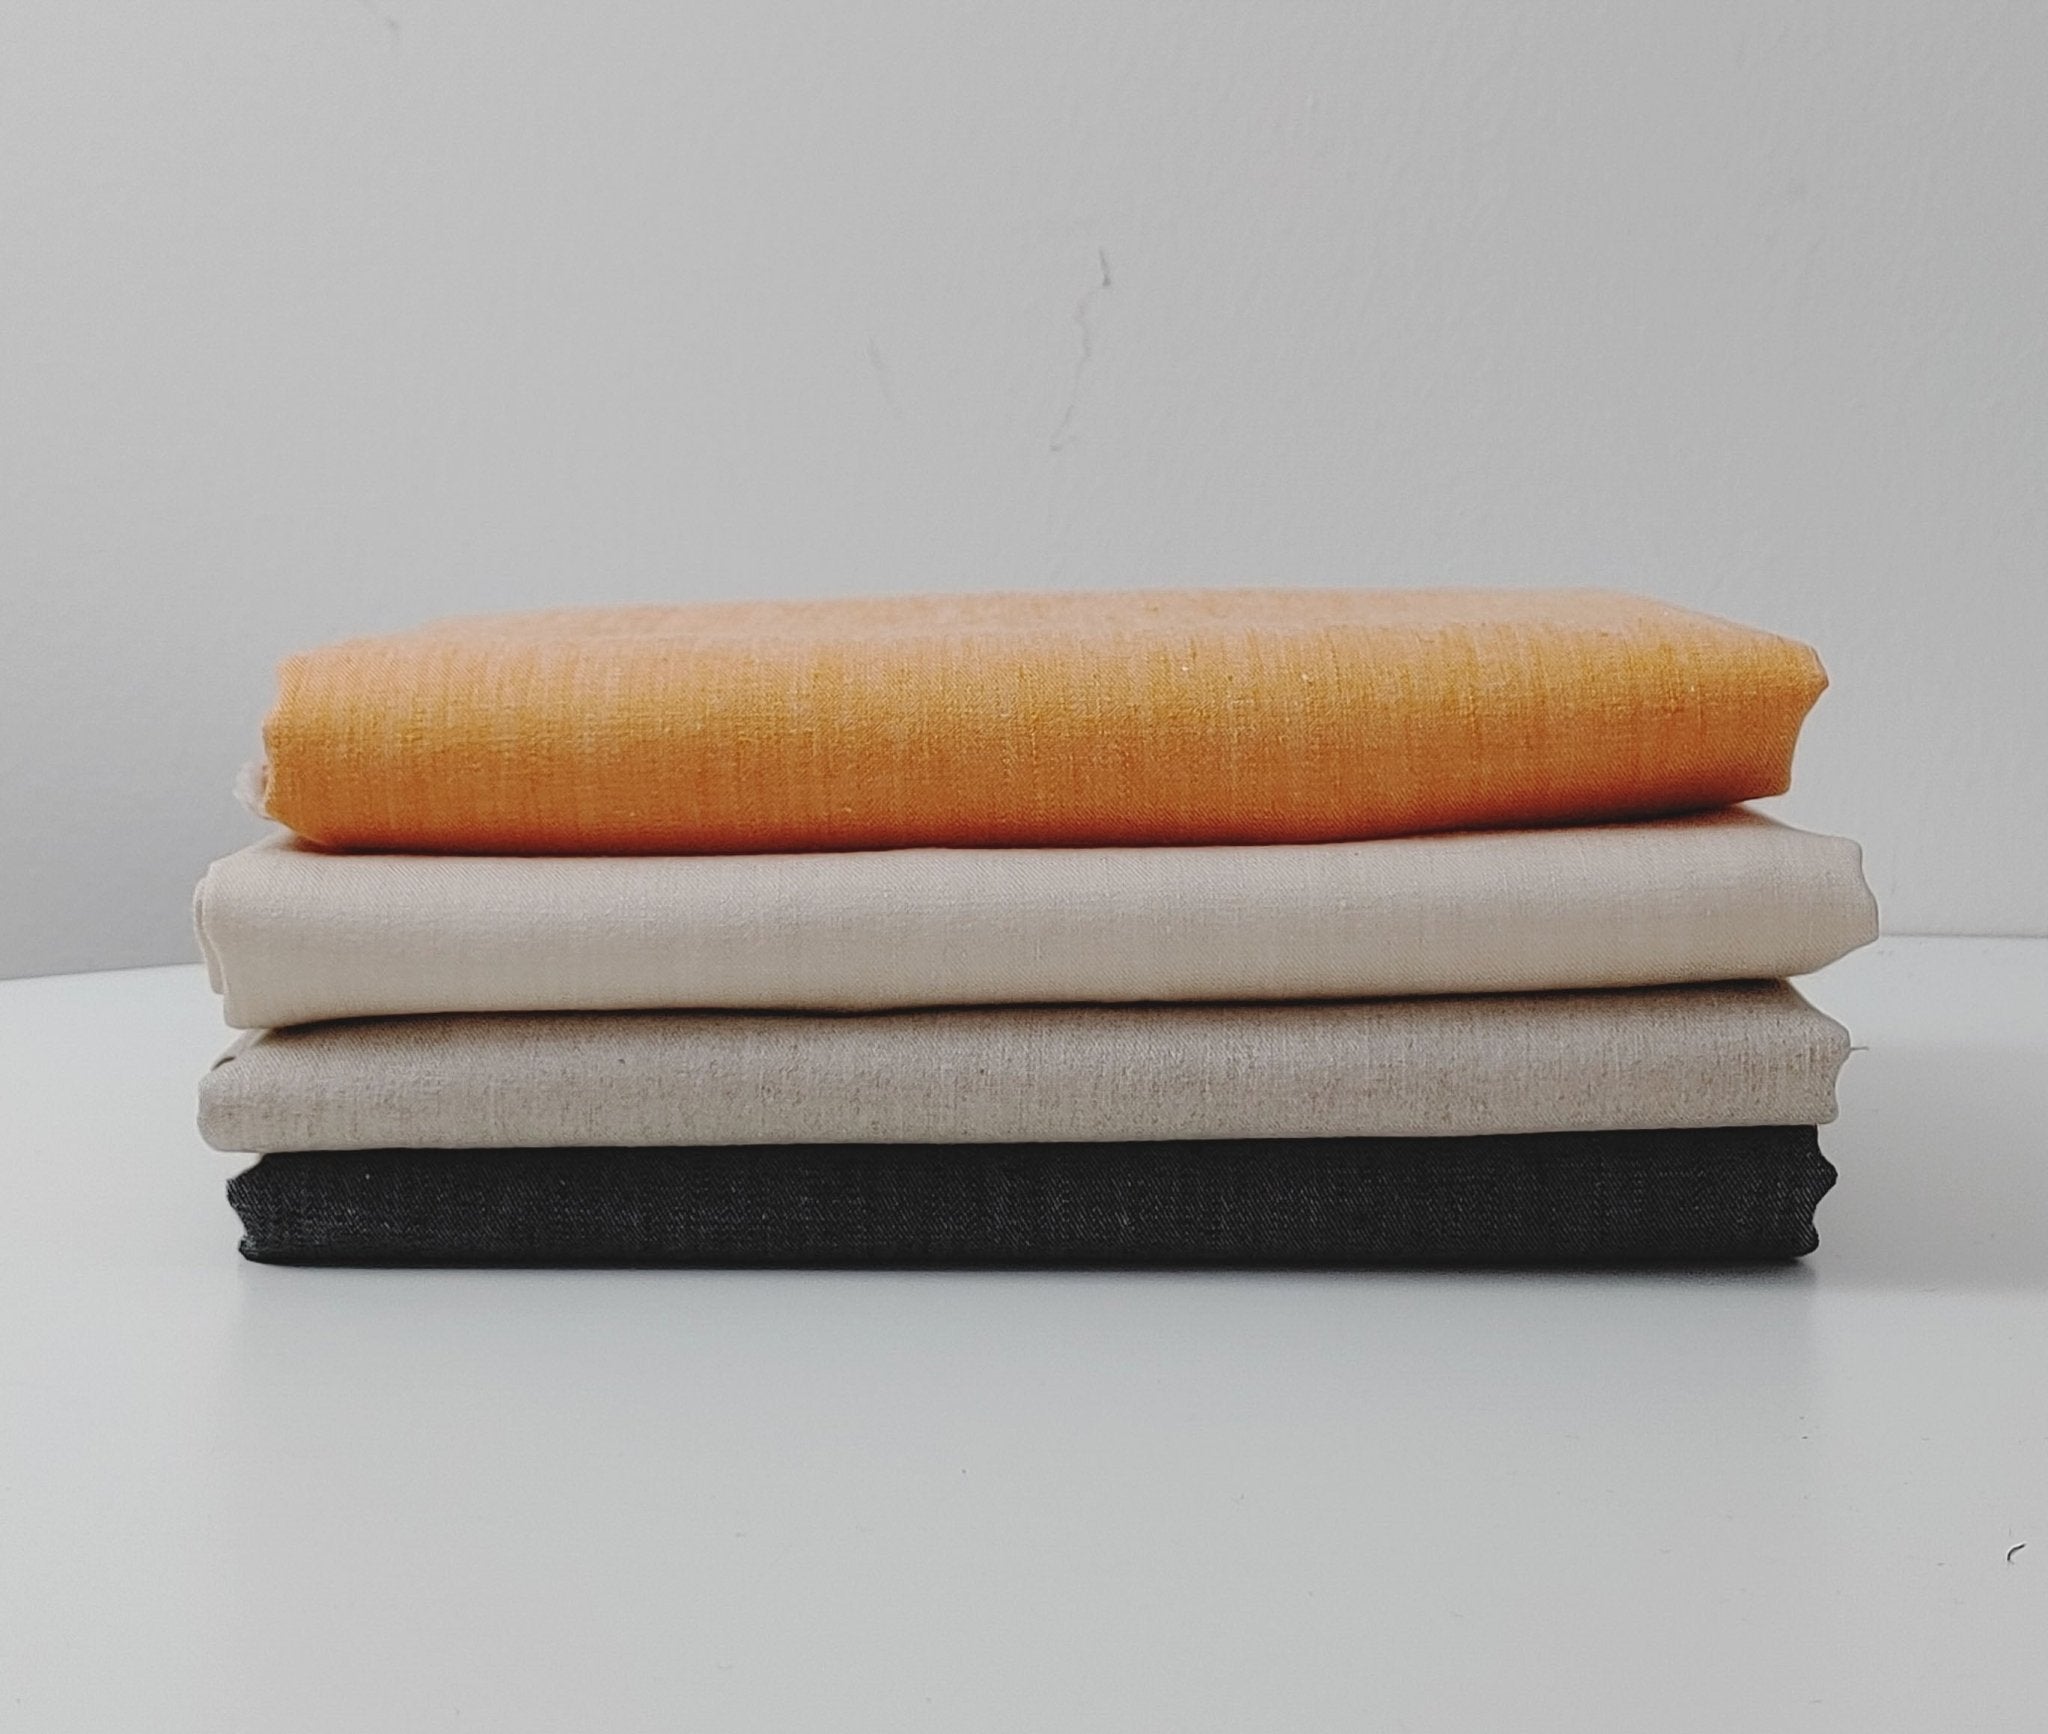 Chambray Linen Cotton Stretch Twill Fabric 3099 3248 3249 2234 - The Linen Lab - Orange